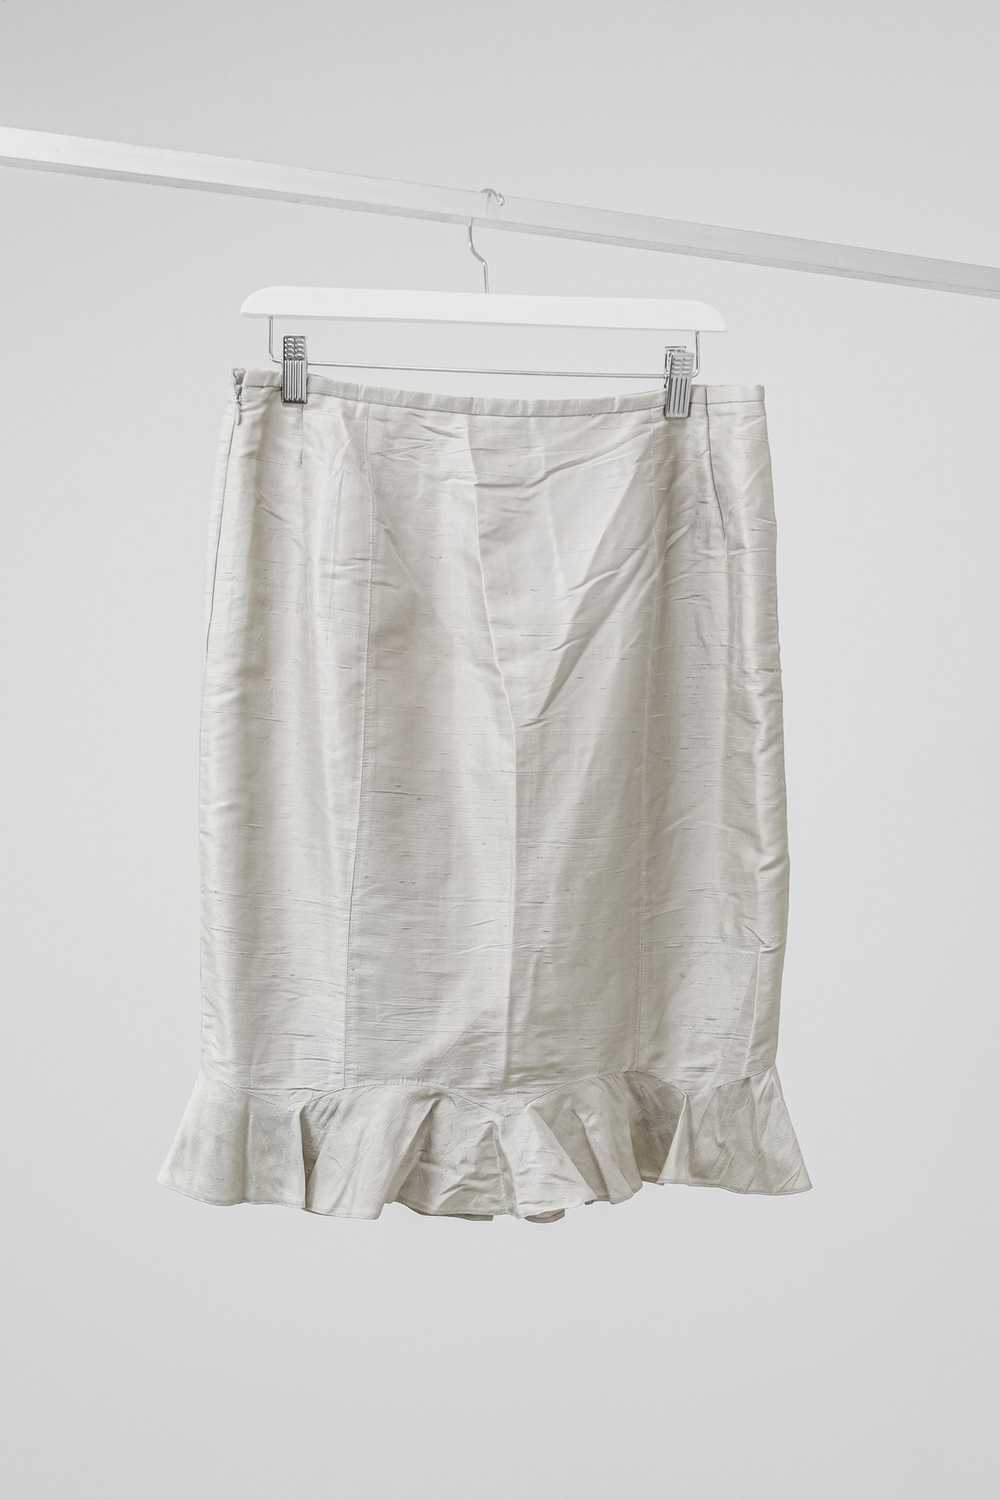 Armani Armani Silk Shantung Skirt - image 2